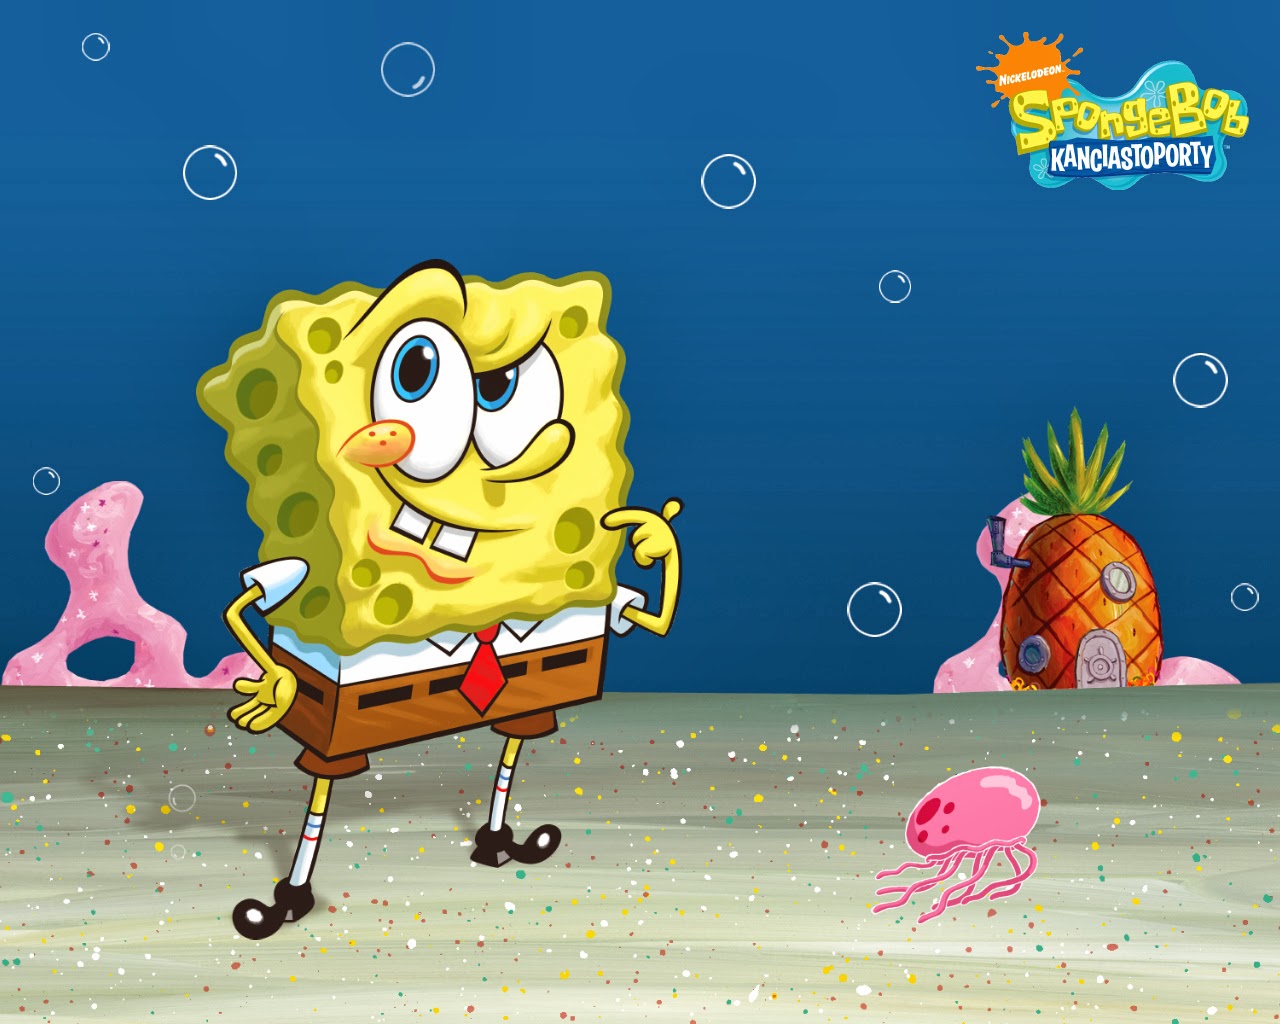 Spongebob Squarepants - wide 4